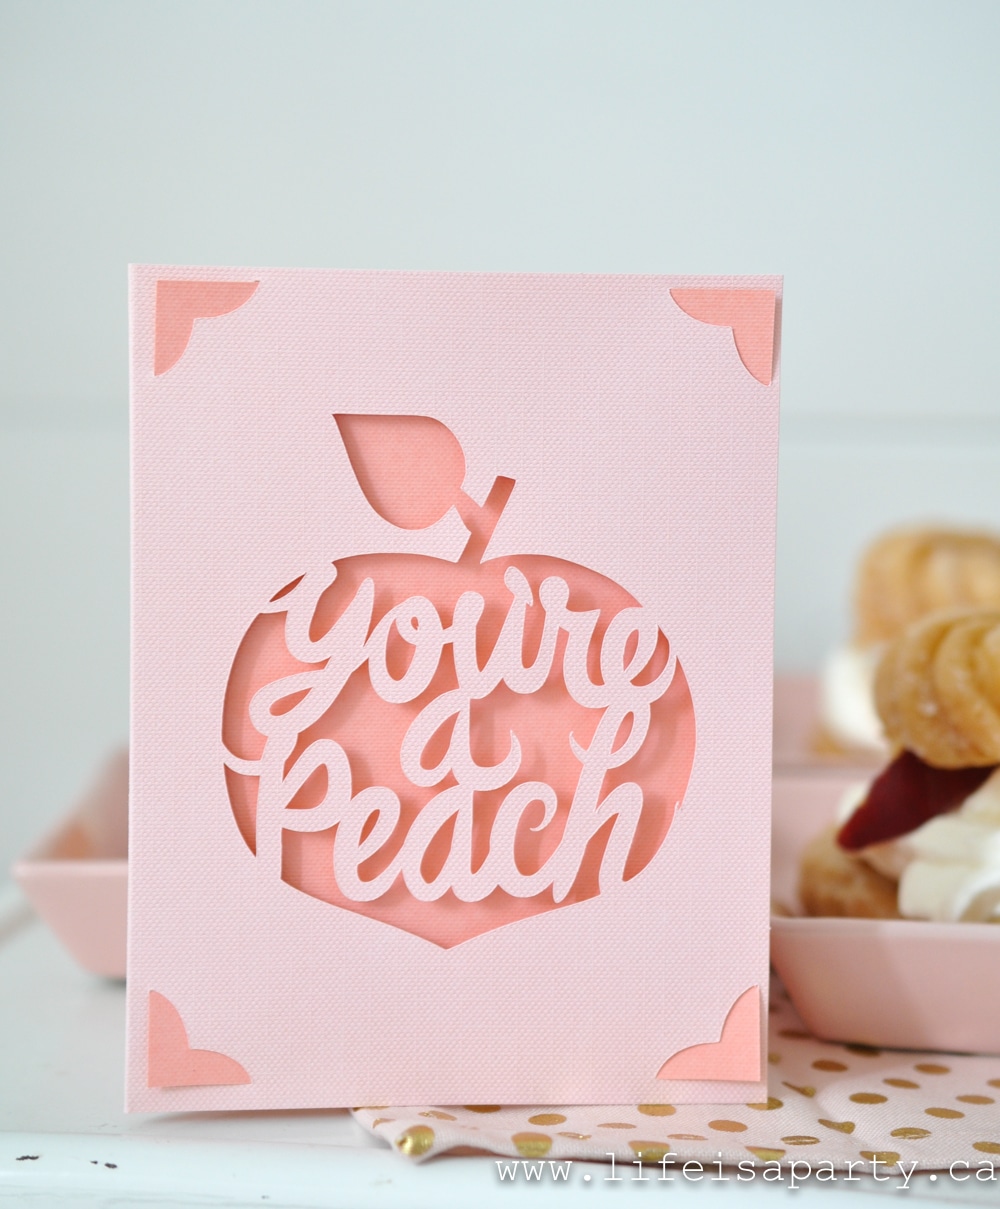 DIY peach party invitations cards